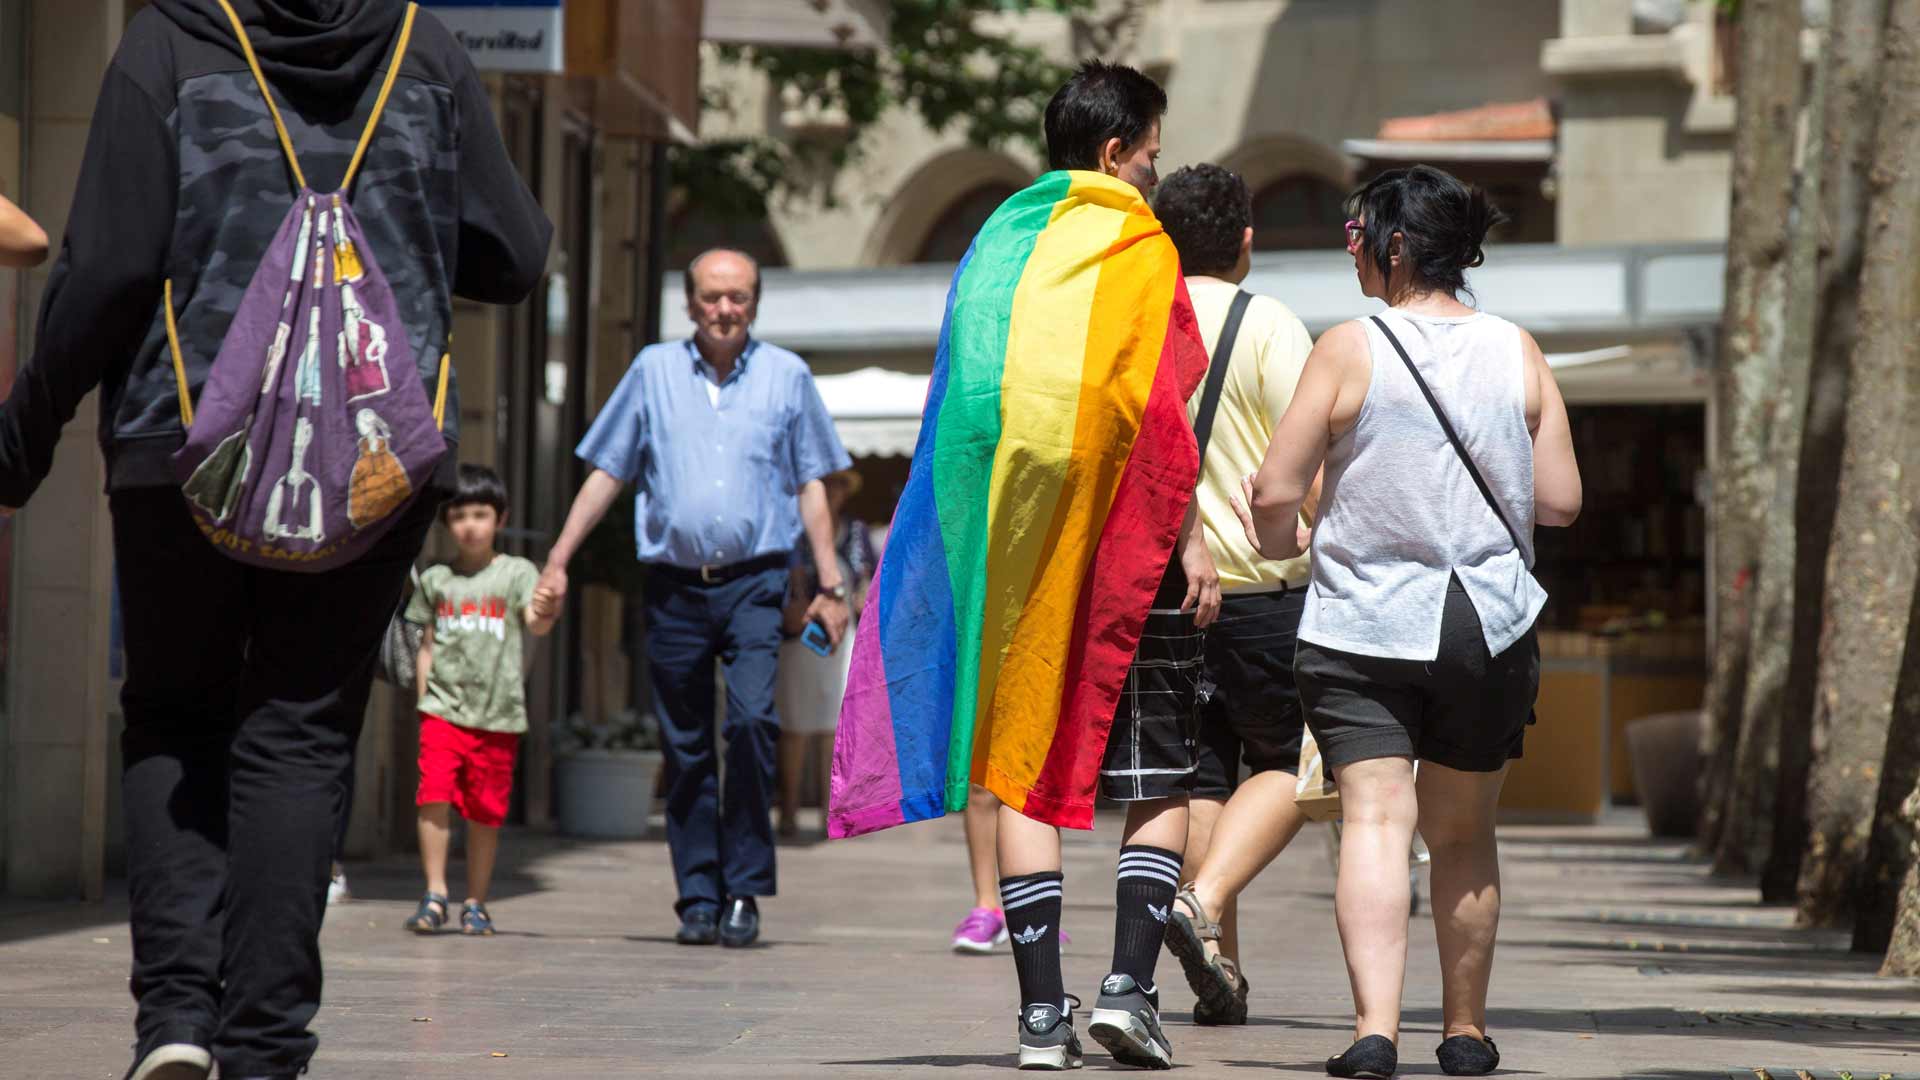 Agresión homófoba en Barcelona: "Te voy a hacer heterosexual a hostias"